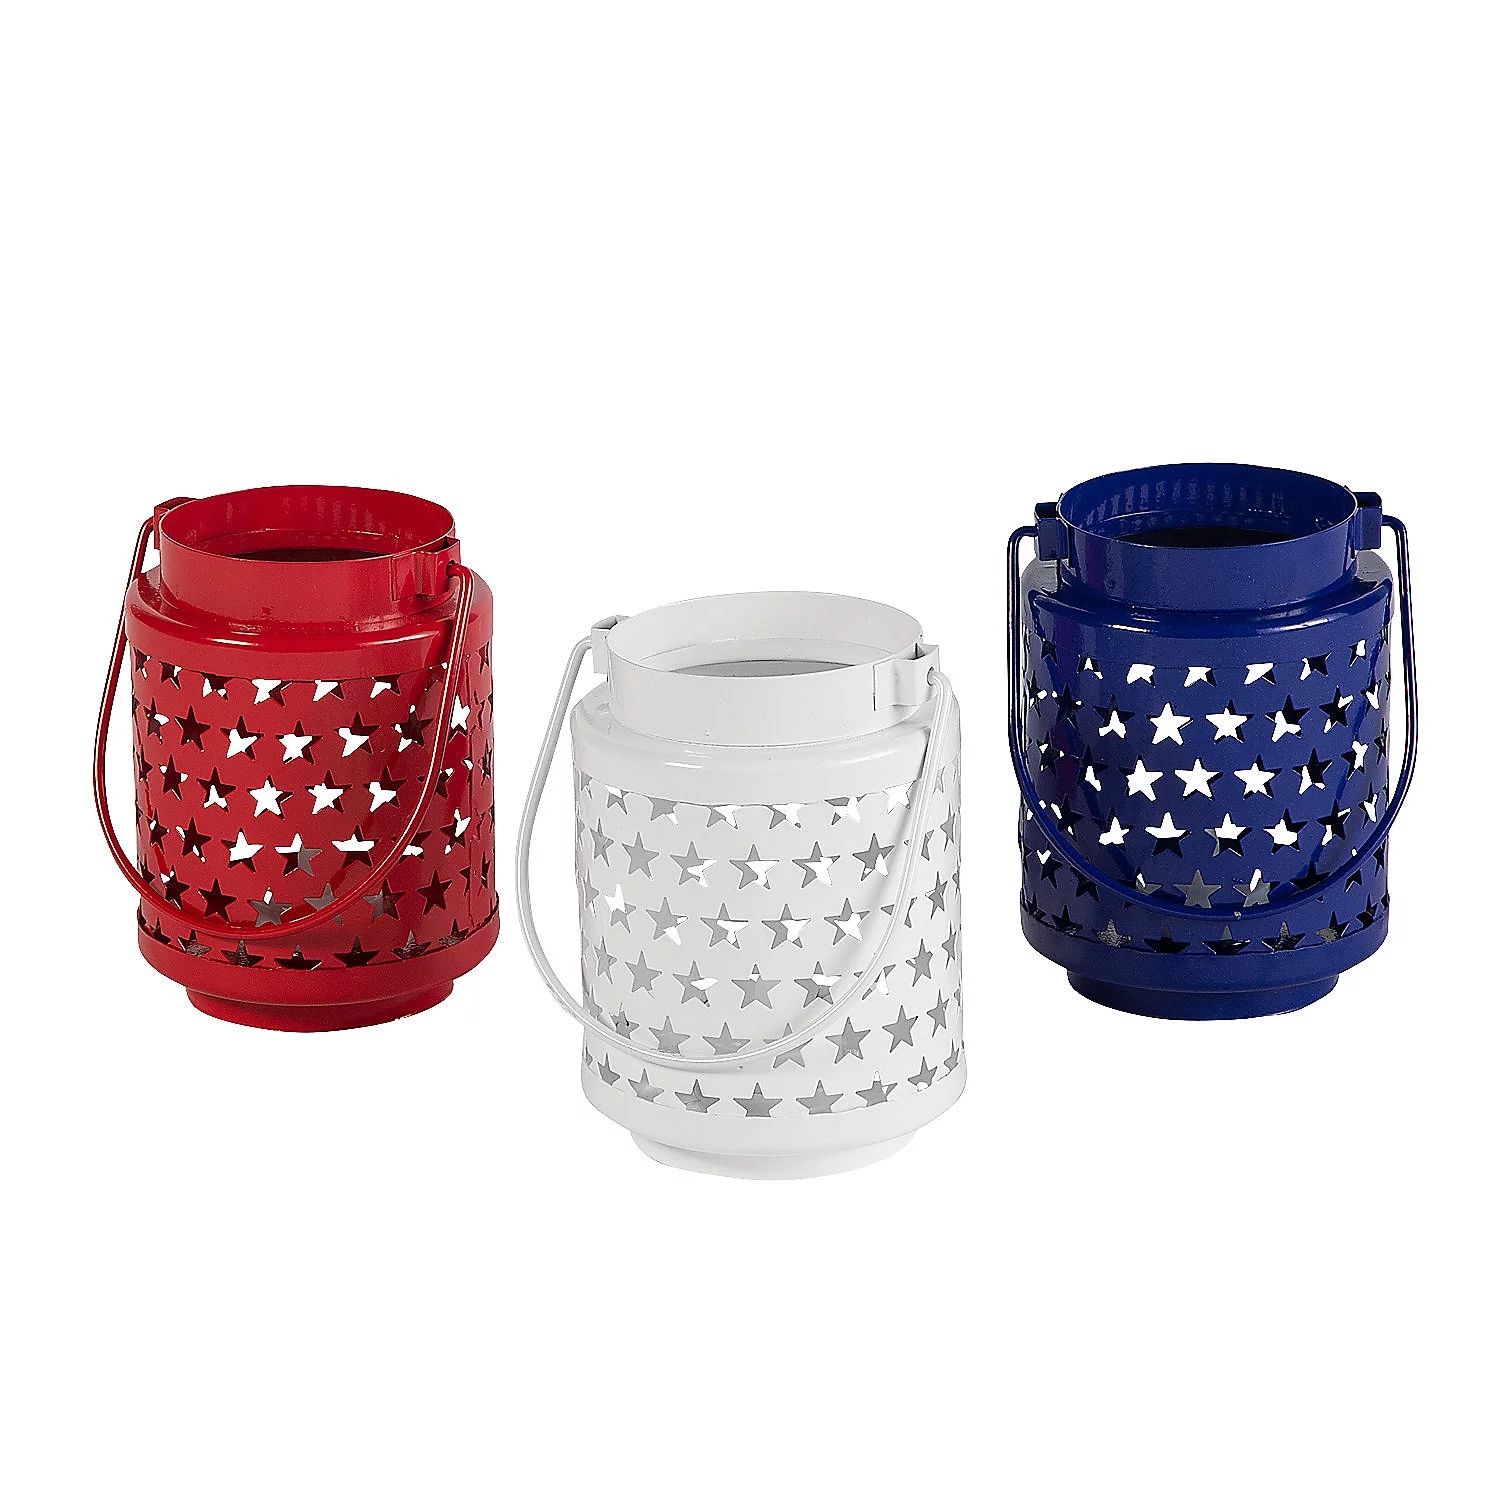 Light-Up Patriotic Lantern Set, Home Decor, Fourth of July, 3 Pieces | Walmart (US)